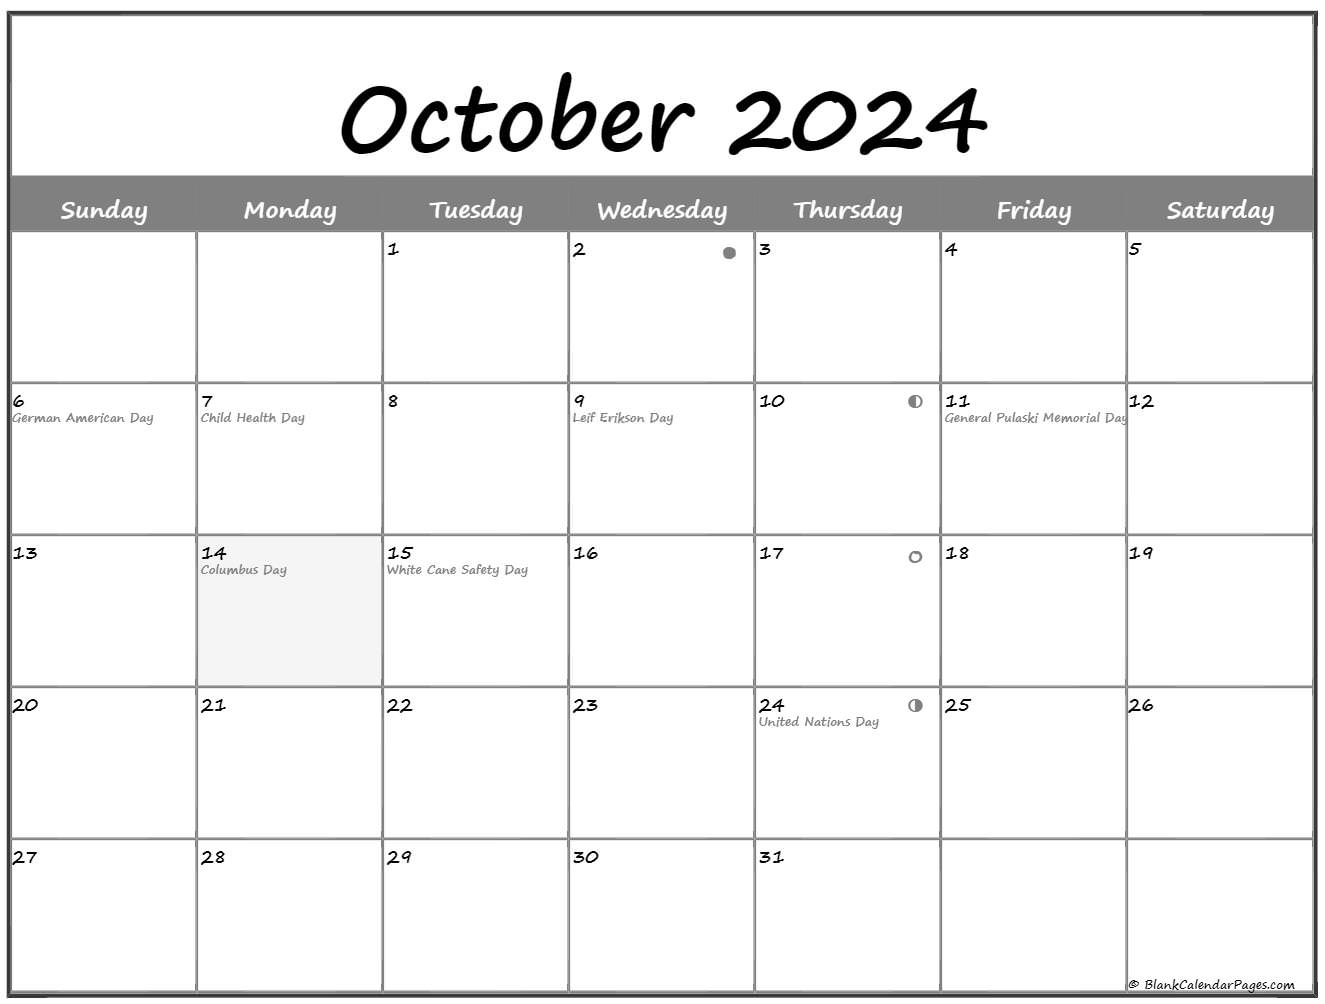 October 2020 Lunar Calendar | Moon Phase Calendar1767 x 1333